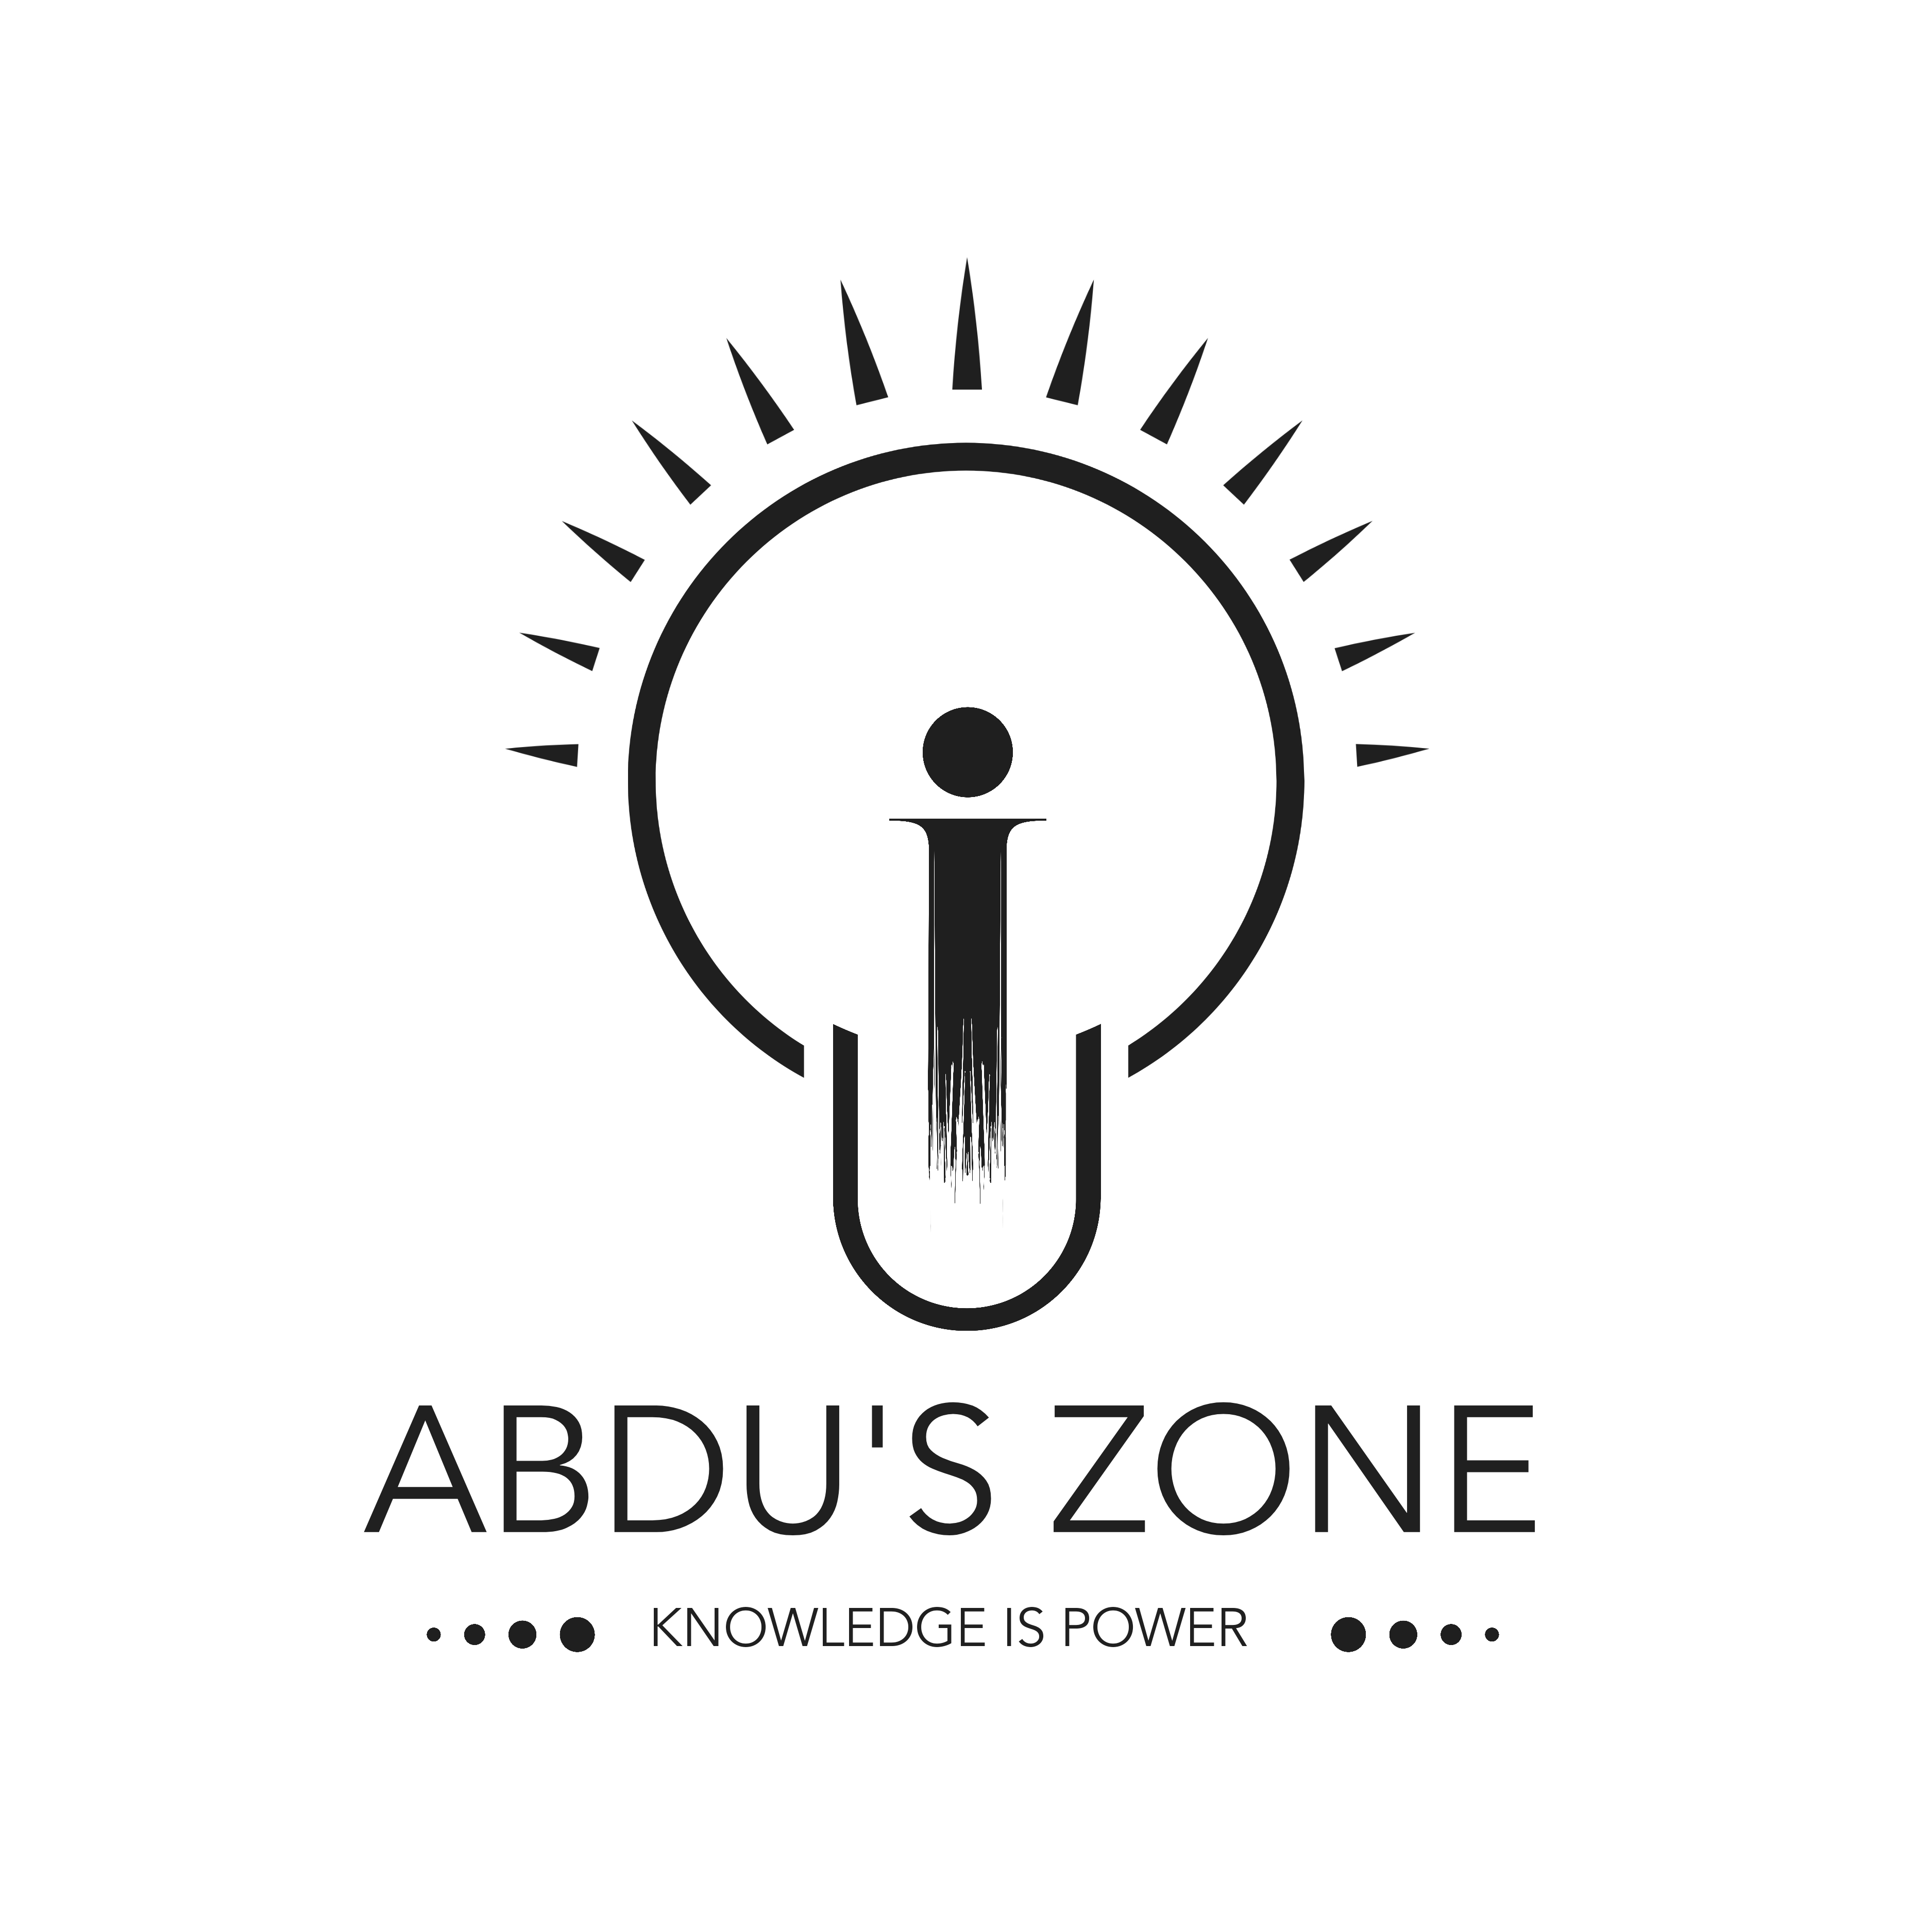 Abdu's zone